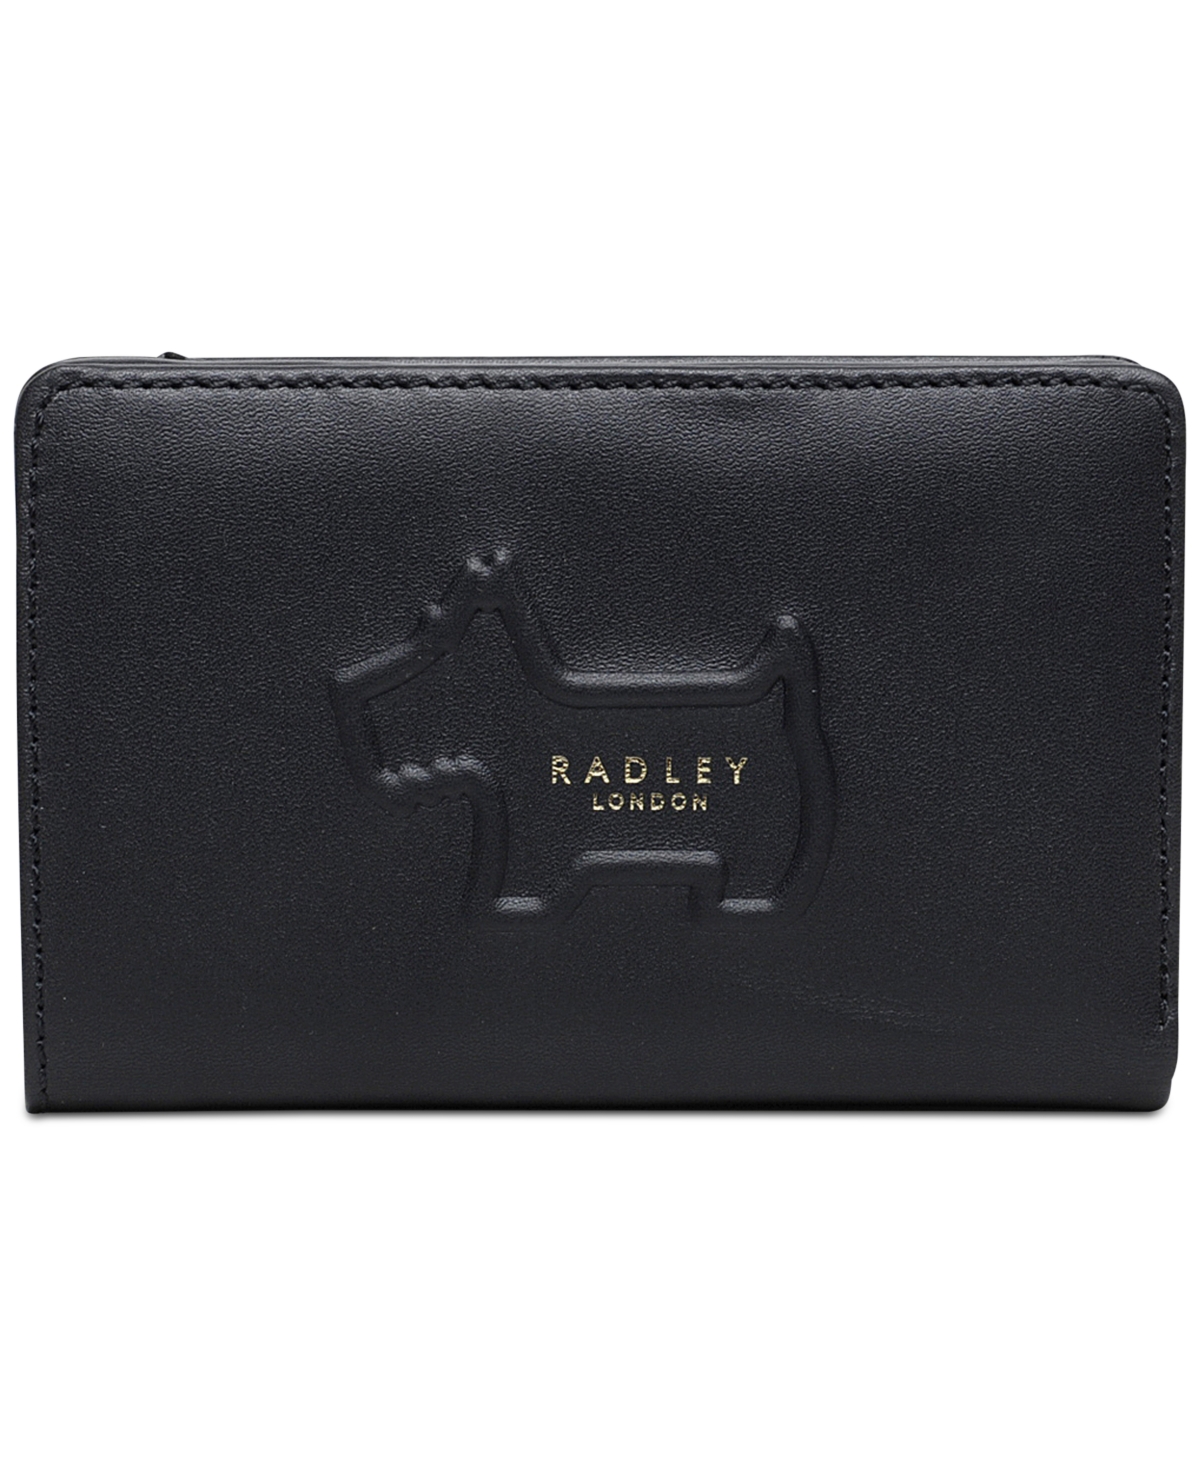 Radley Shadow Medium Zip-Top Leather Wallet - Black/Gold